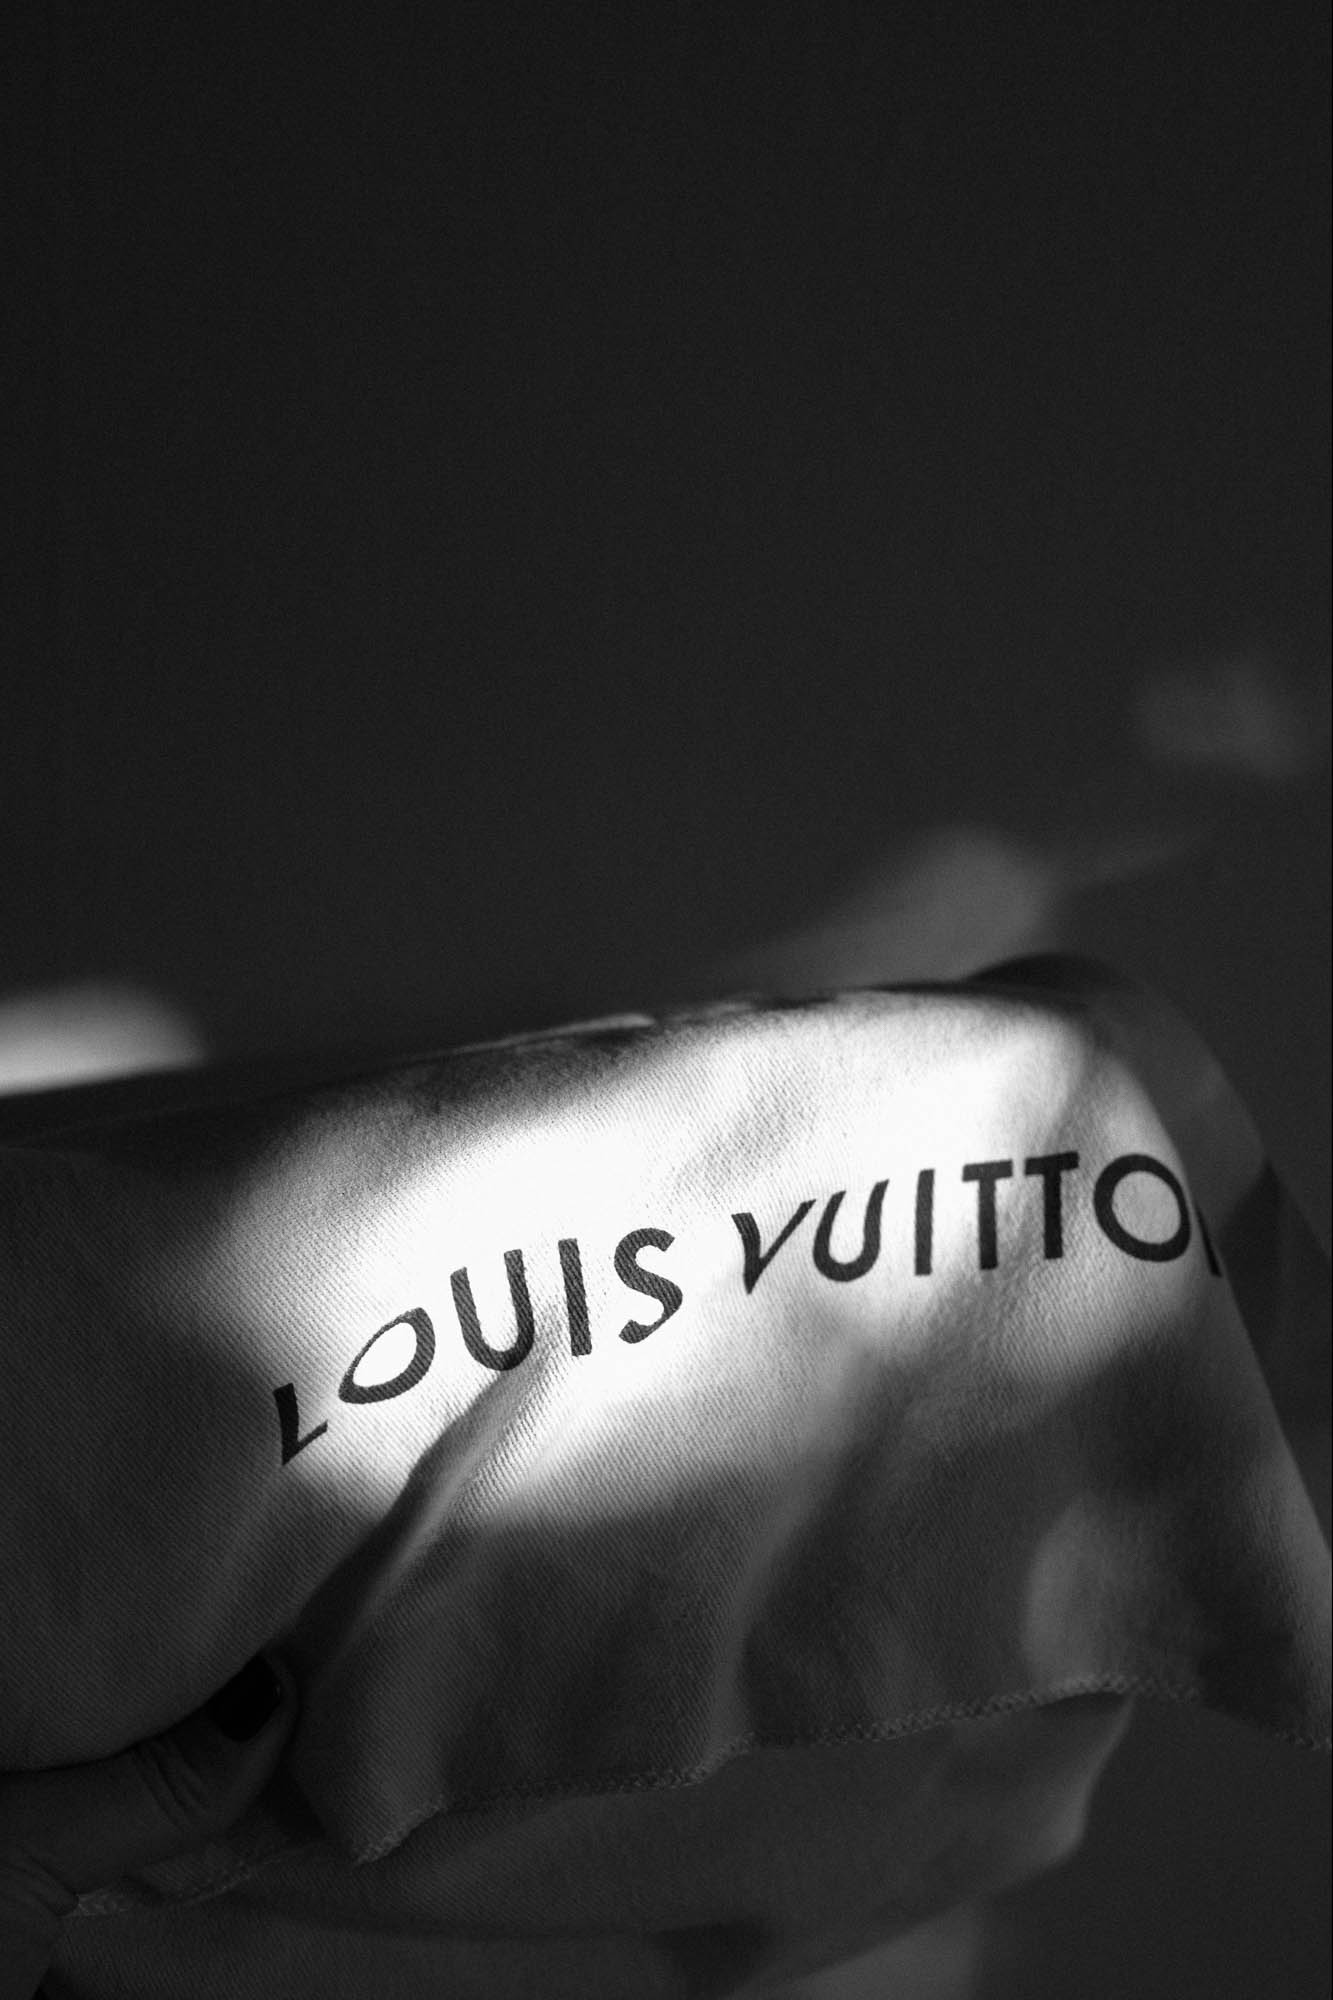 Louis Vuitton — Creating Substance